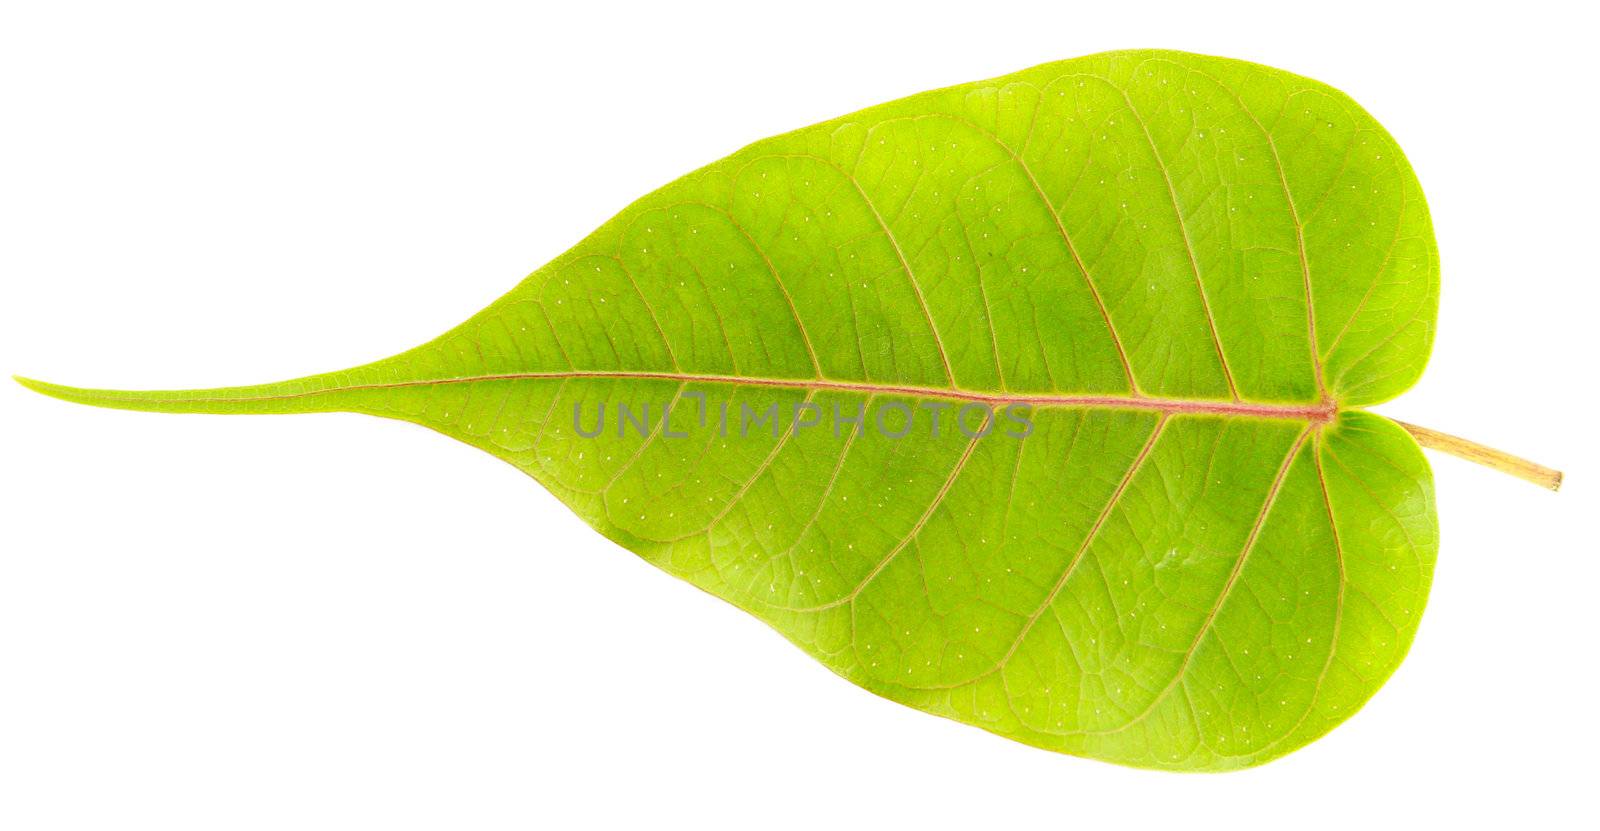 Green  bo leaf vein on white background by bajita111122